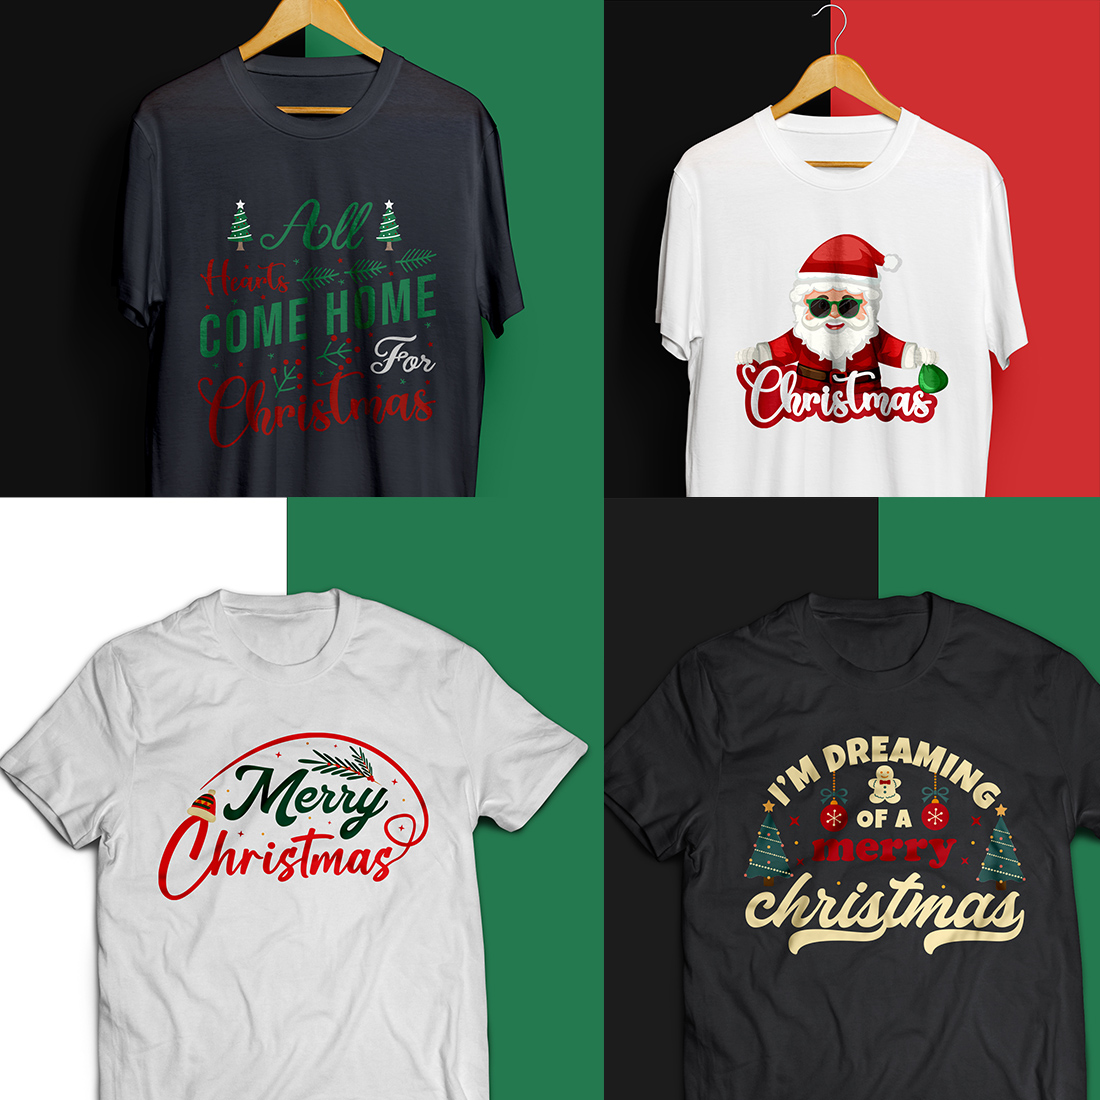 T-shirt Christmas Different Designs Bundle cover image.